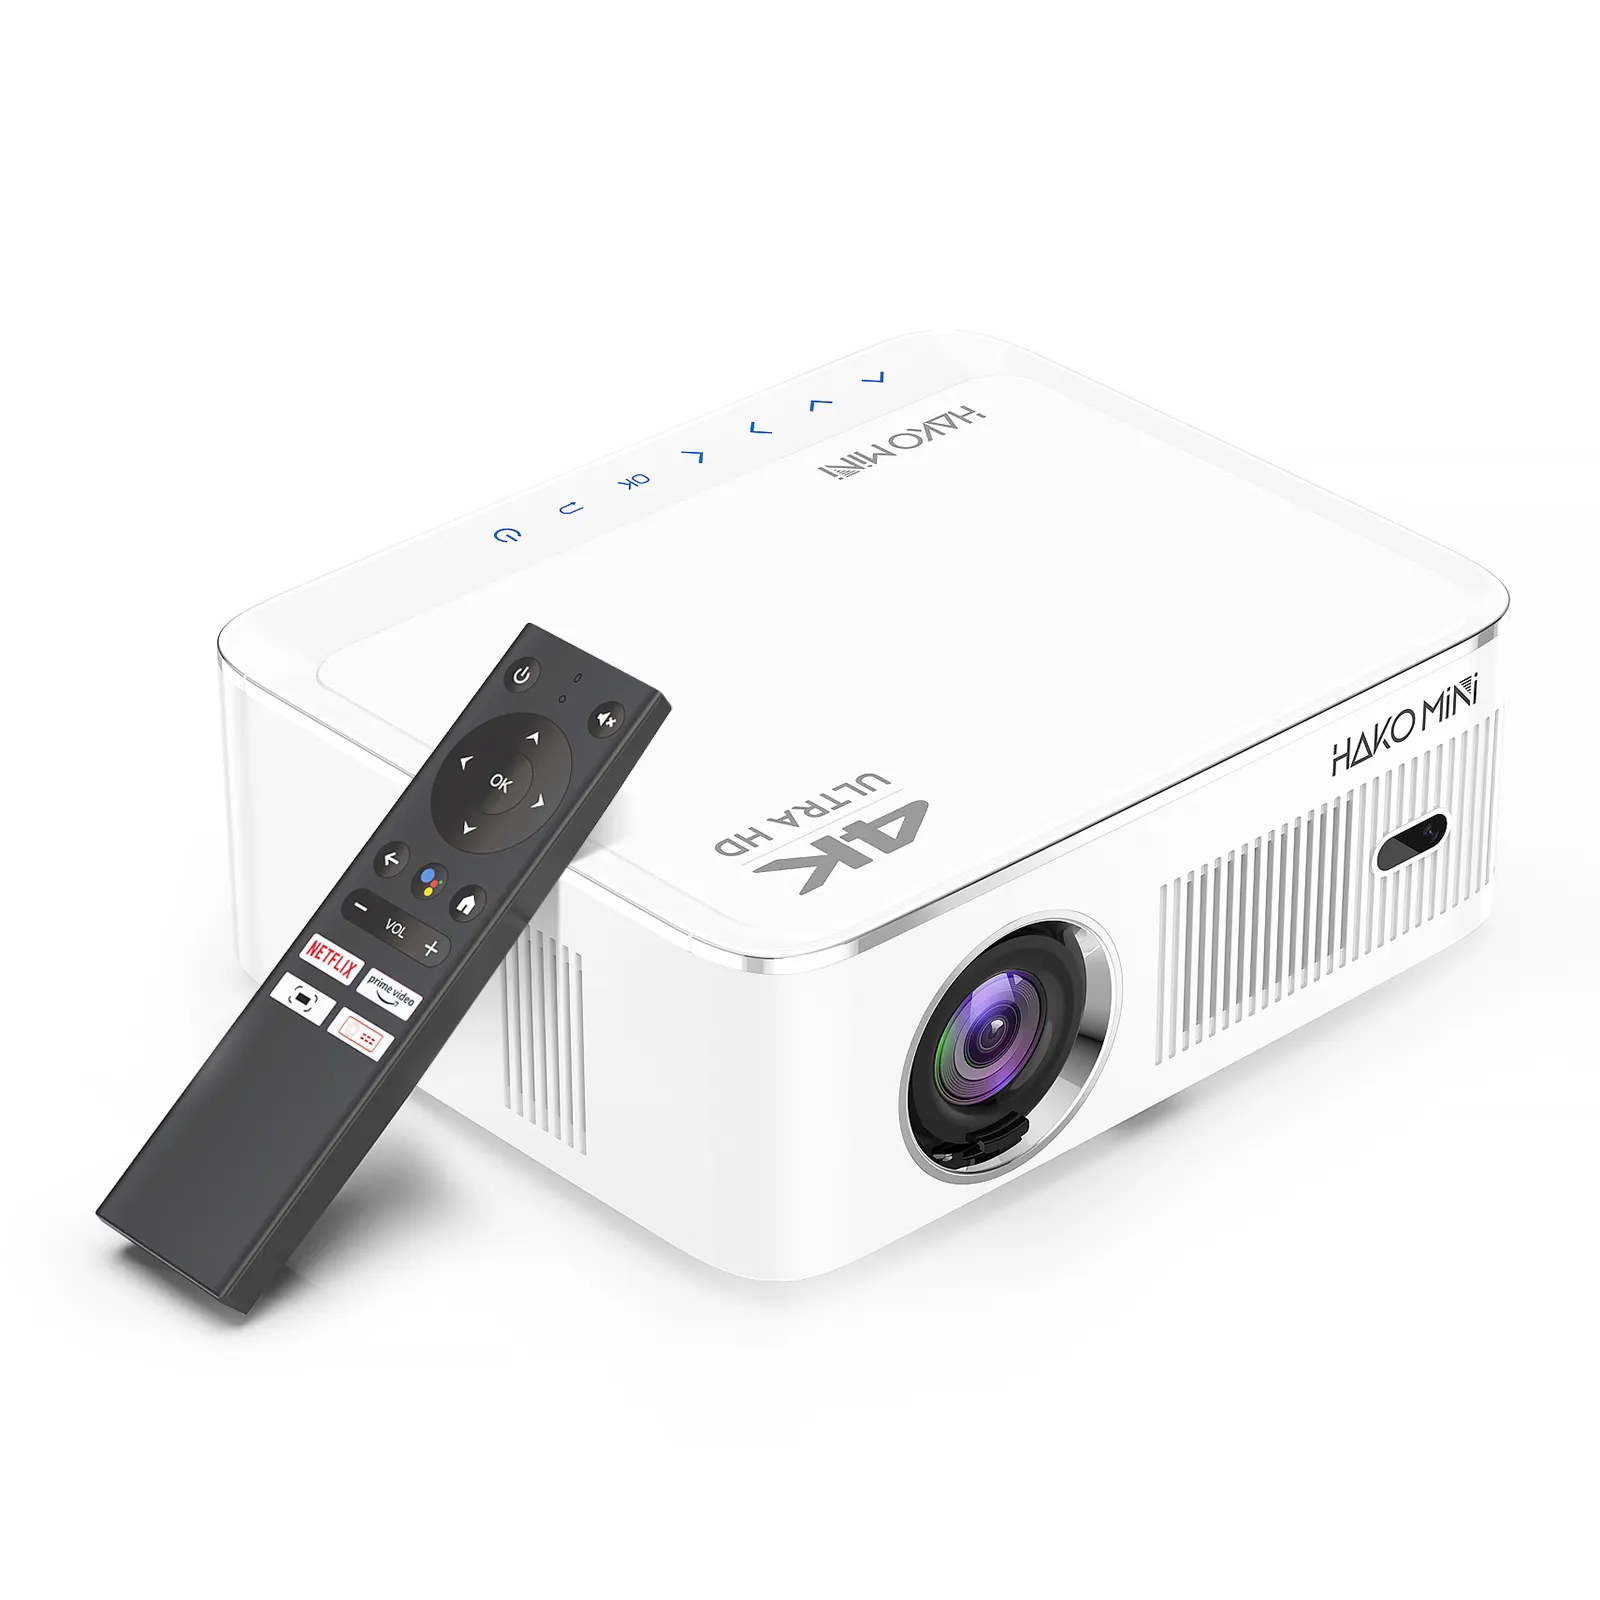 Hot Amlogic S905Y2 quad core 2gb ram 8gb rom proiettore LED proiettore Video Full HD 500 ANSI lumen 4K videoproiettore per la casa